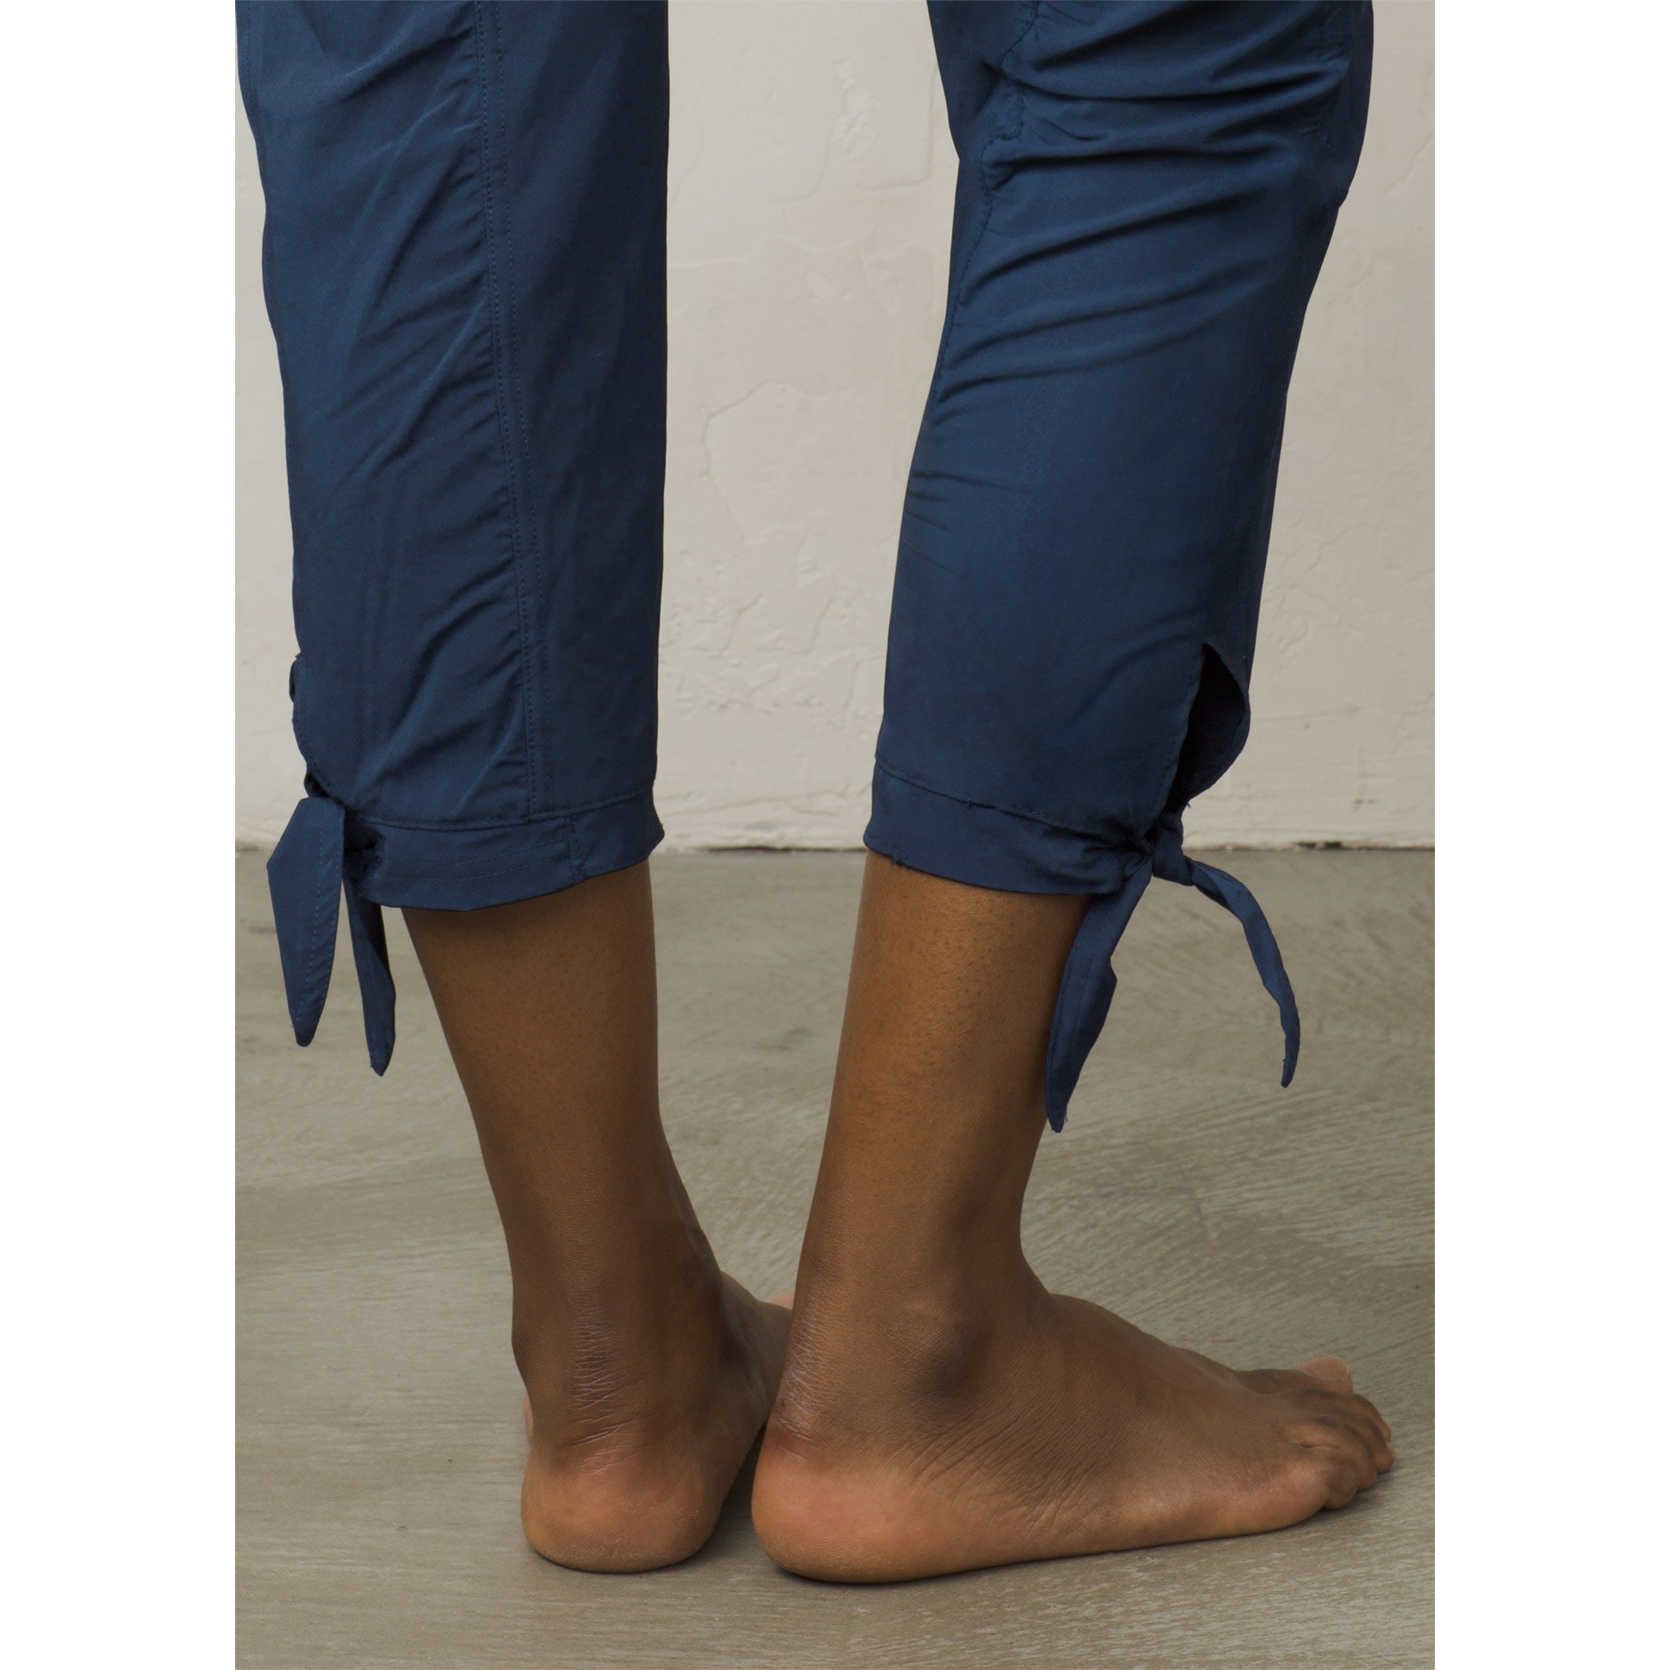 Pantalon Yoga Femme Bindu Pant - Dress Blue